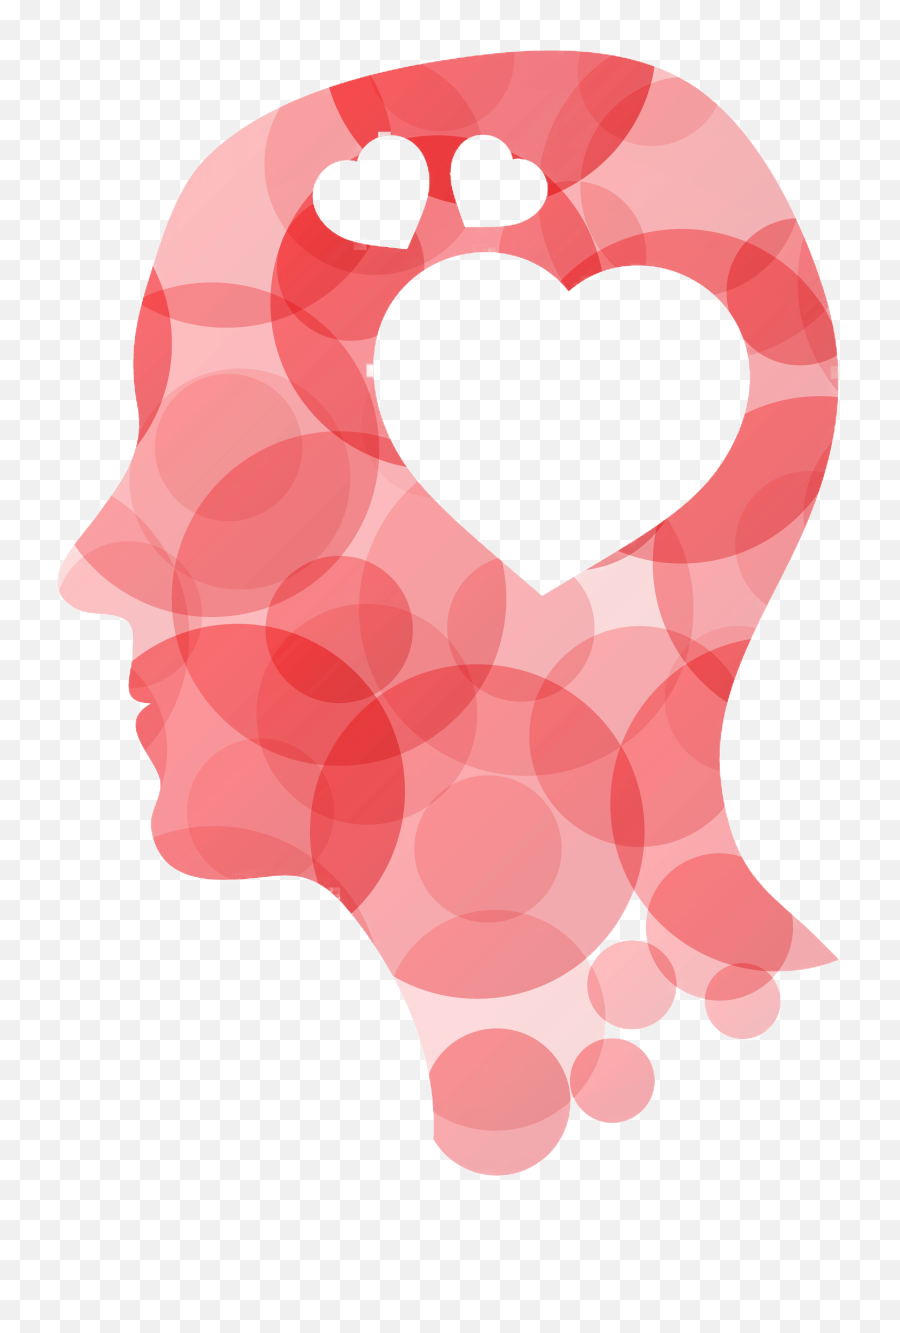 Social Neuroscience Of Human Attachment U2013 Dr Pascal Vrticka Emoji,Emotion And Kingdom Hearts